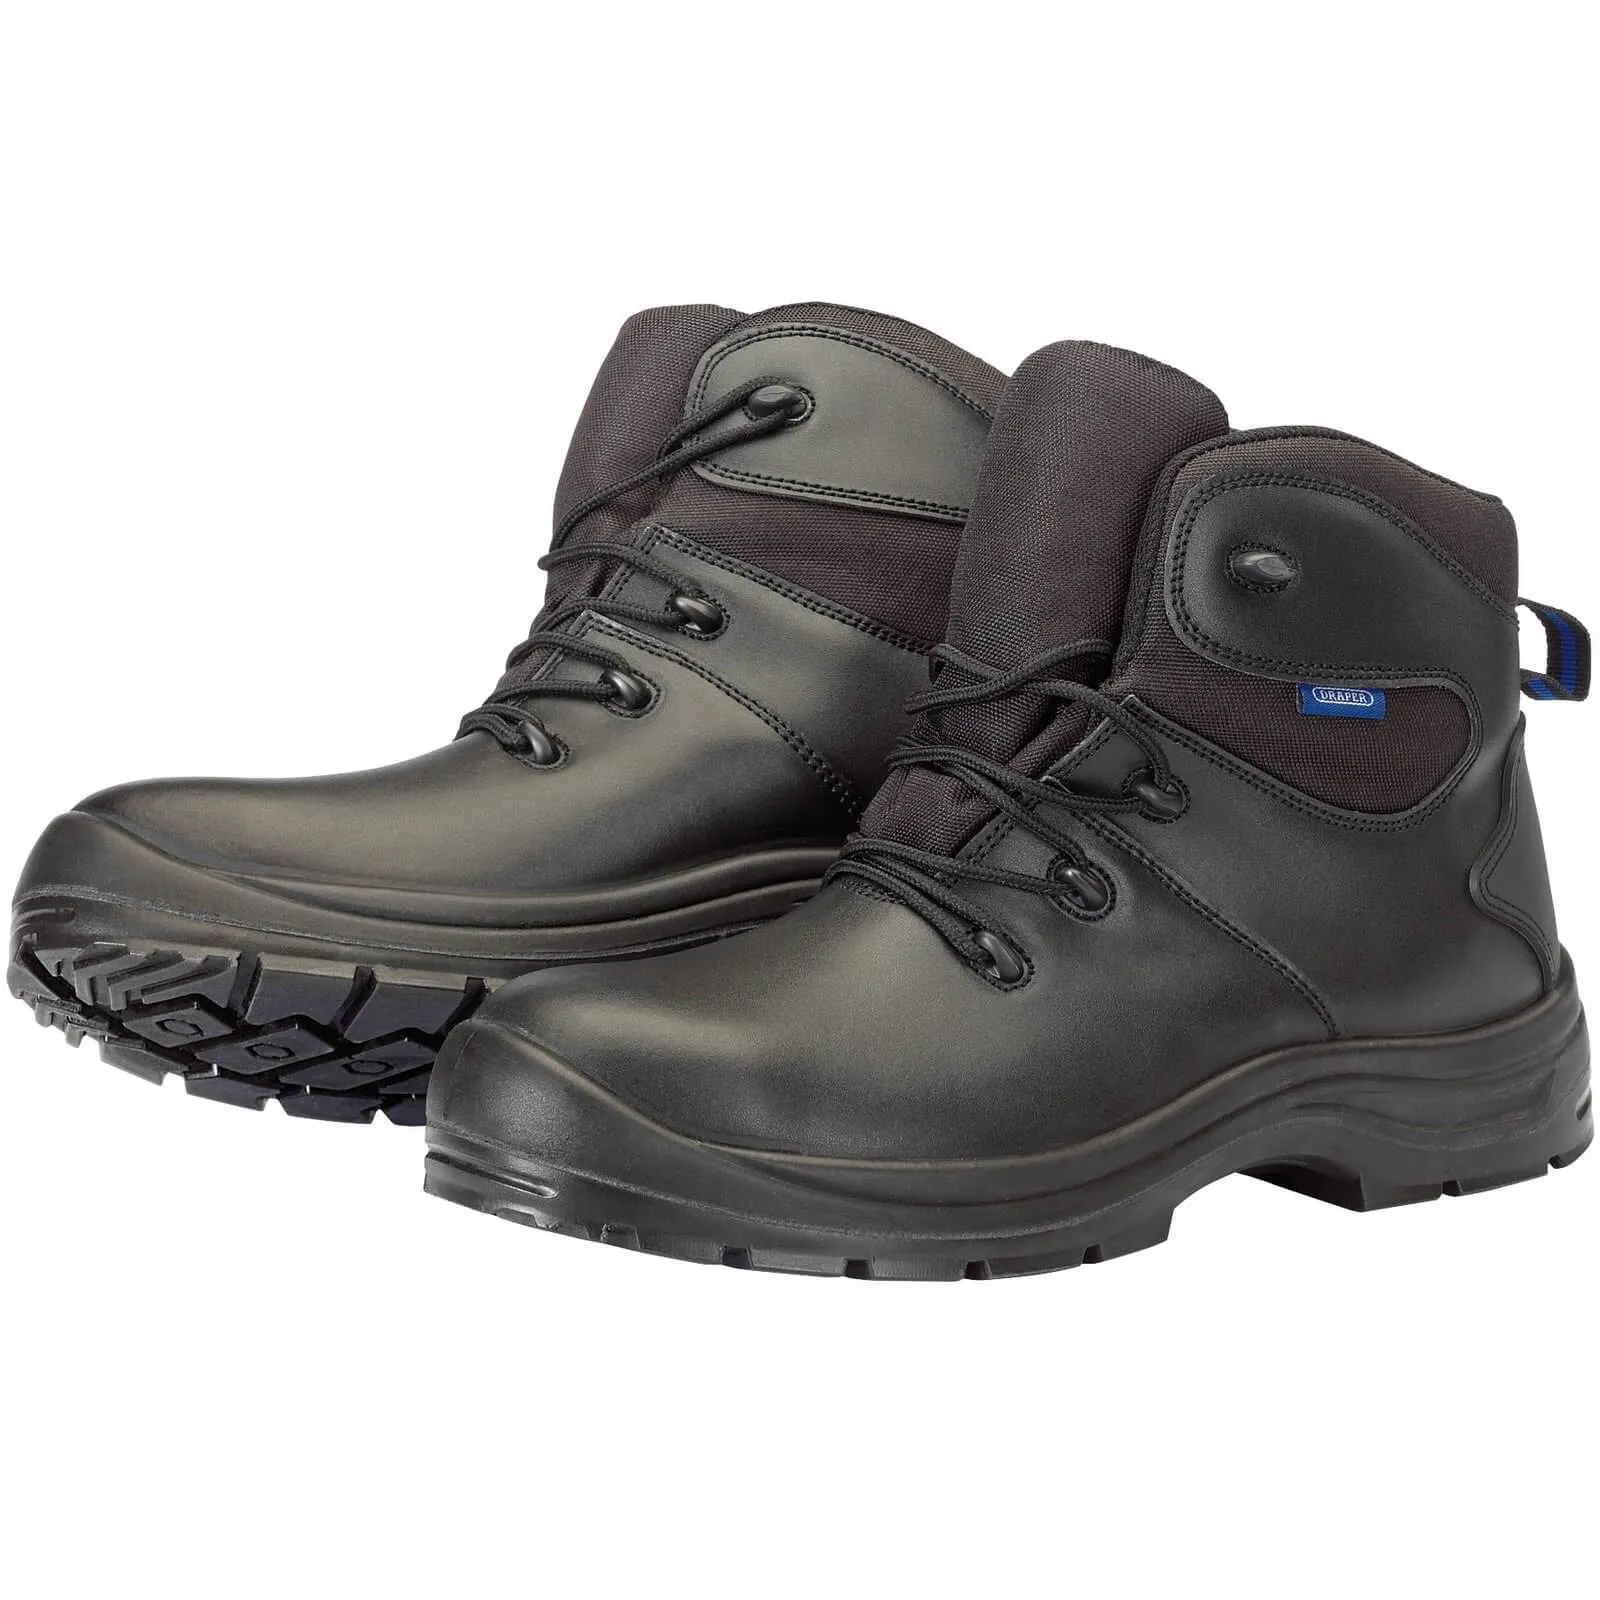 Draper Mens Waterproof Safety Boots - Black, Size 11